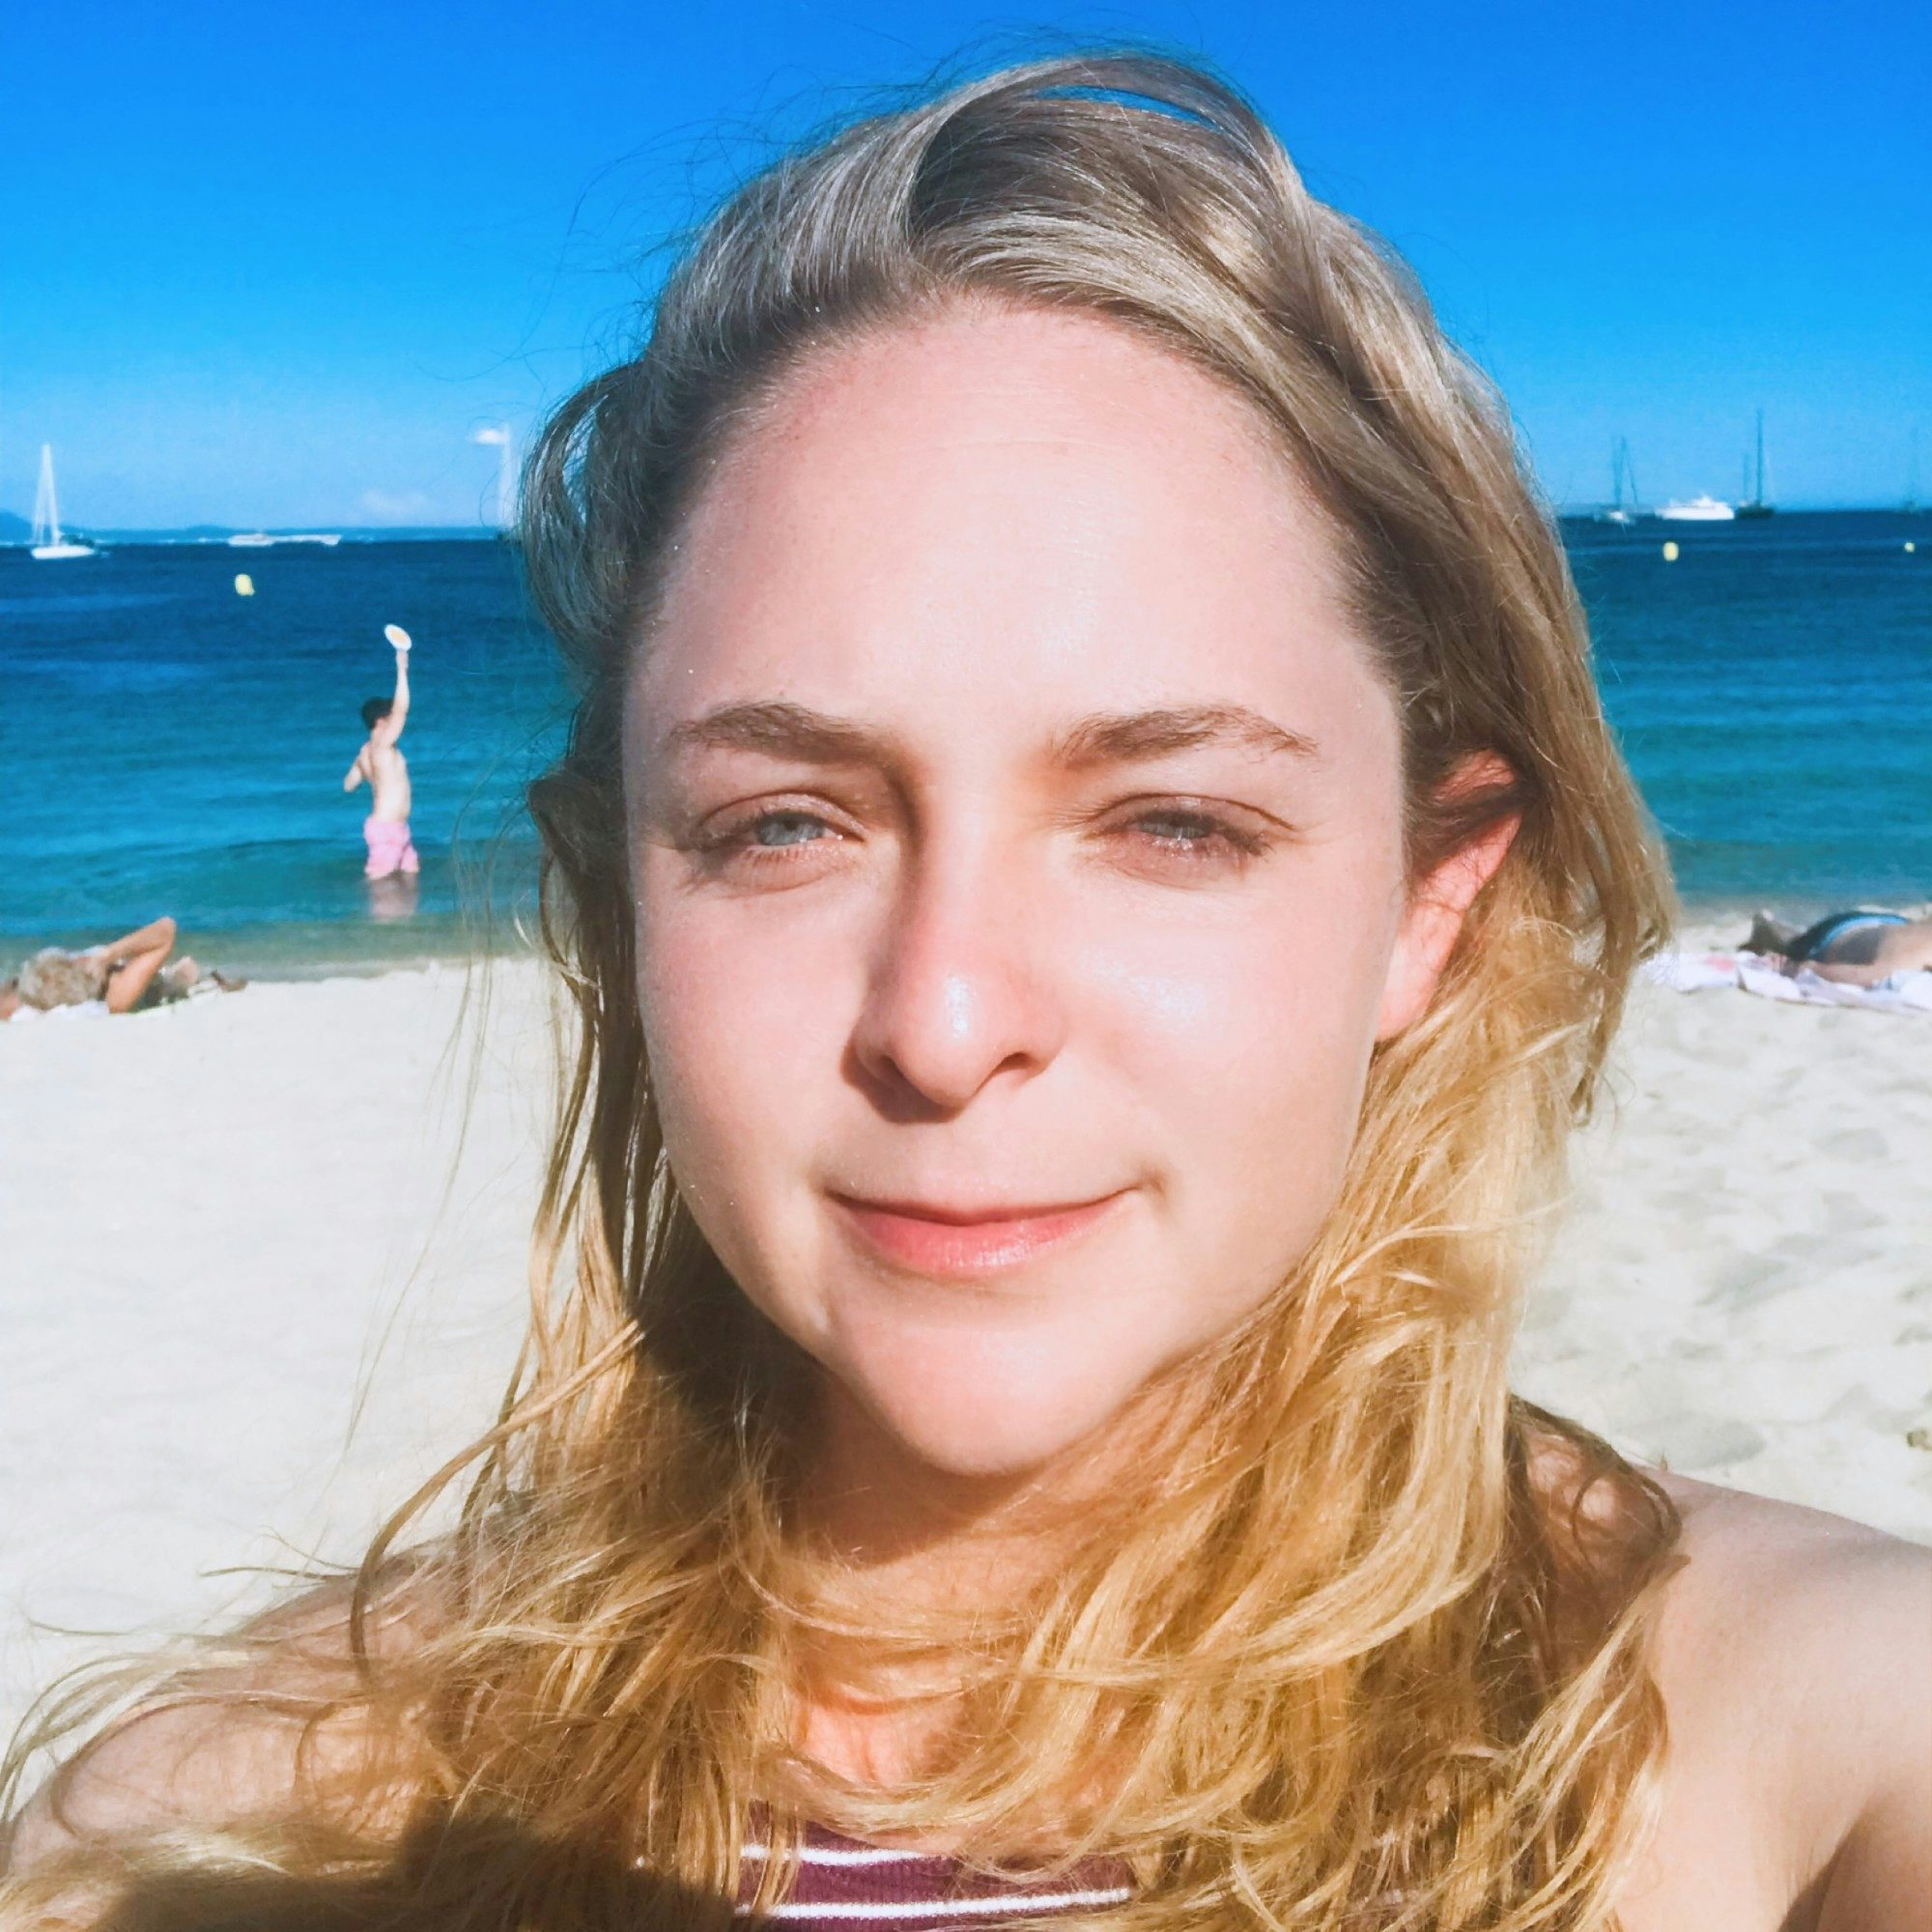 Travel Advisor Sarah Shafer smiling on a beach.